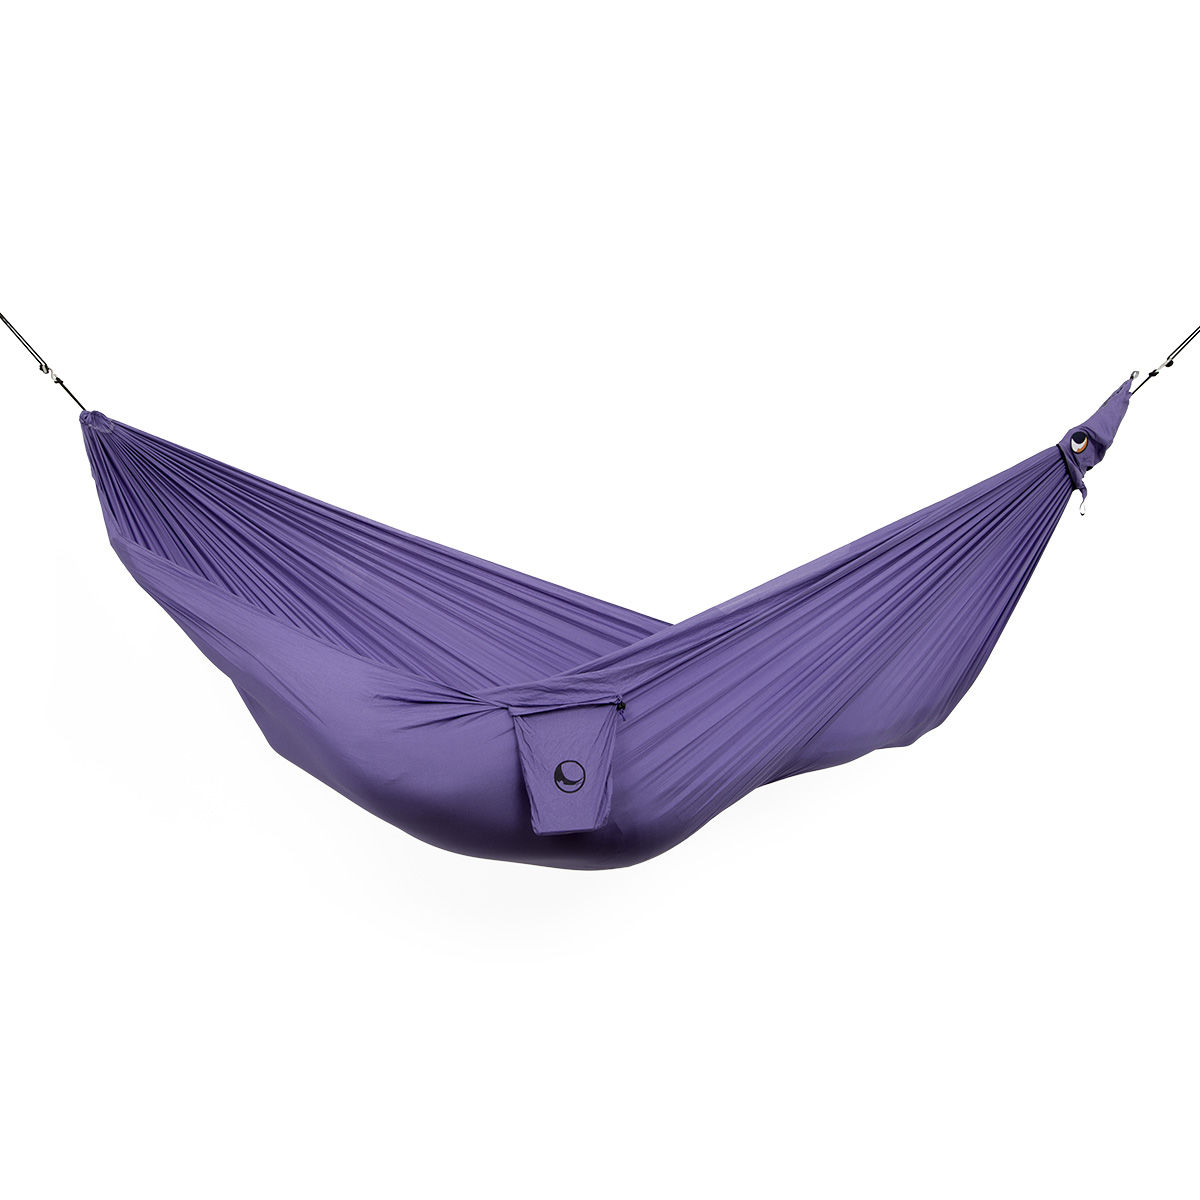 Ticket to the Moon Compact hammock - Purple